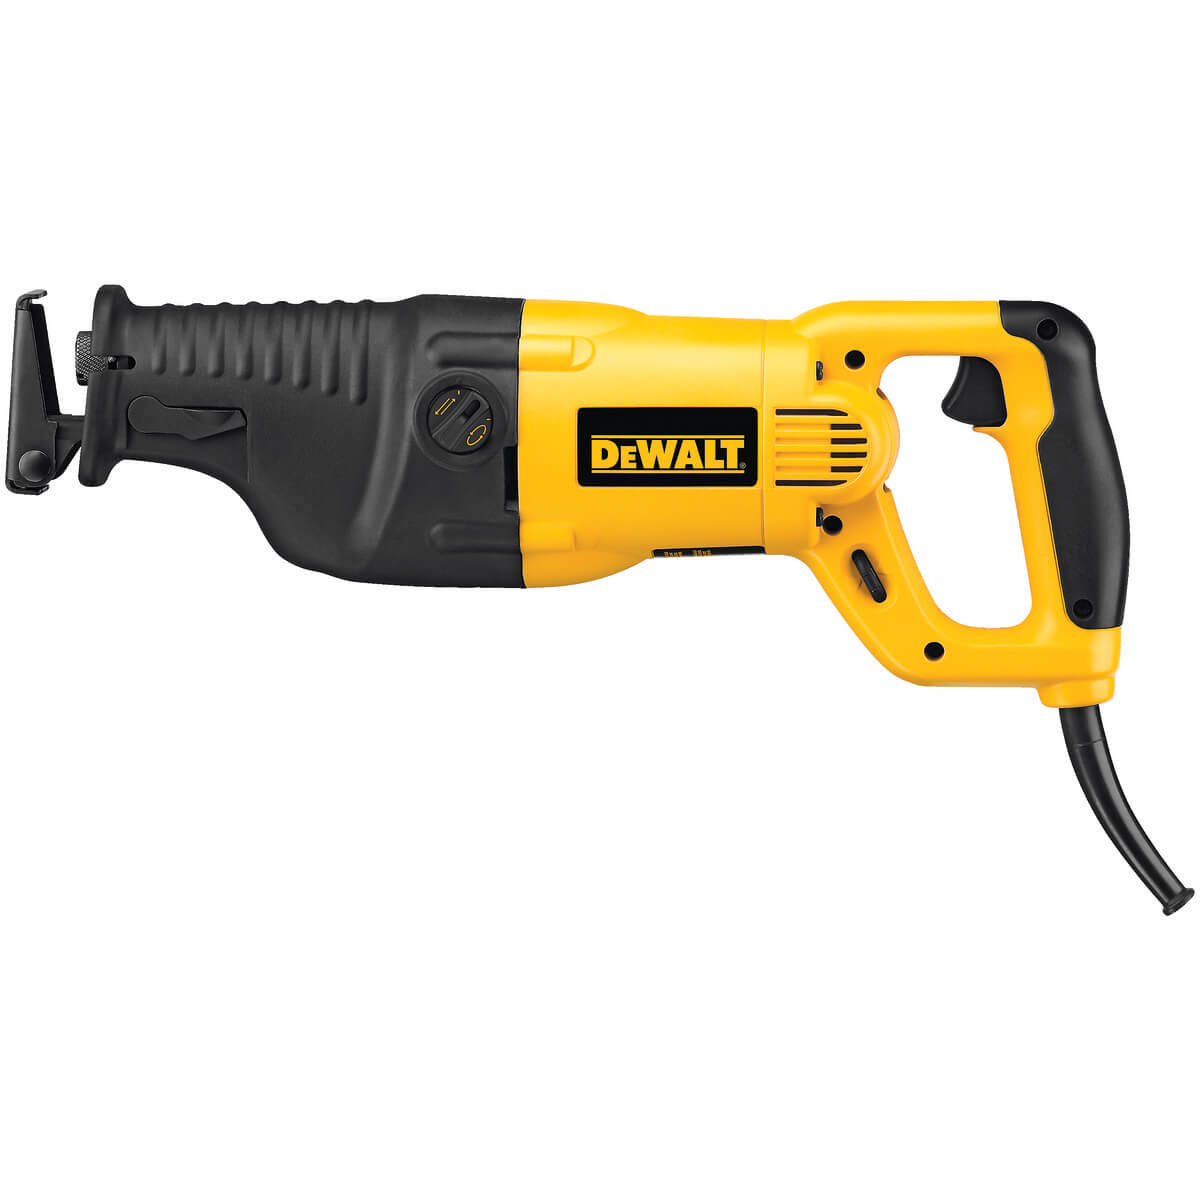 DEWALT DW311K - 13amp 1-1/8" Stroke Reciprocating Saw Kit - wise-line-tools